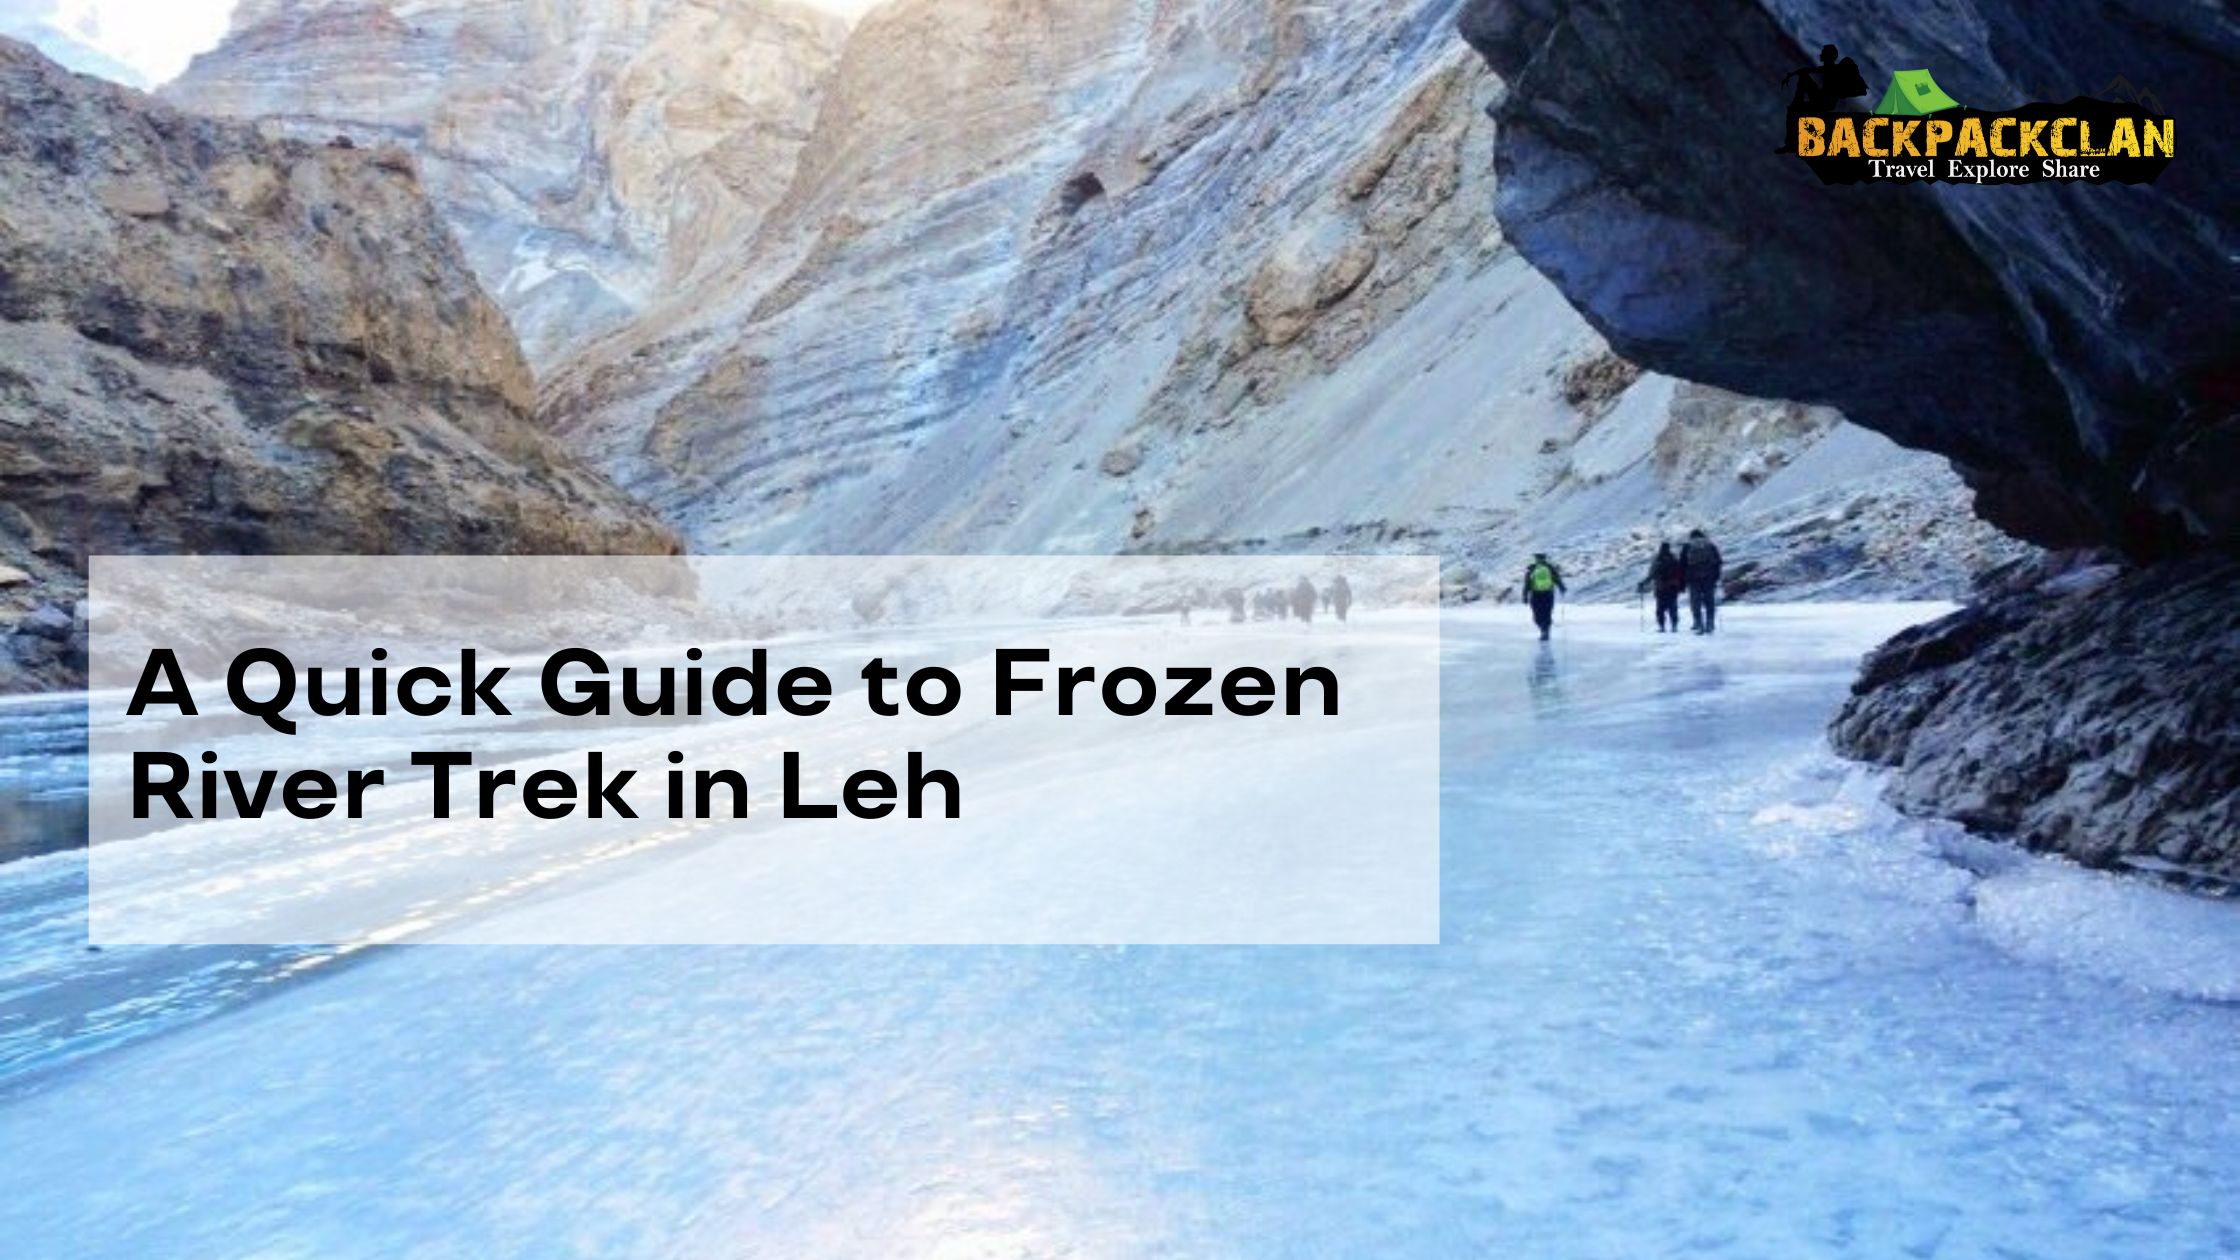 A Quick Guide to Frozen River Trek in Leh